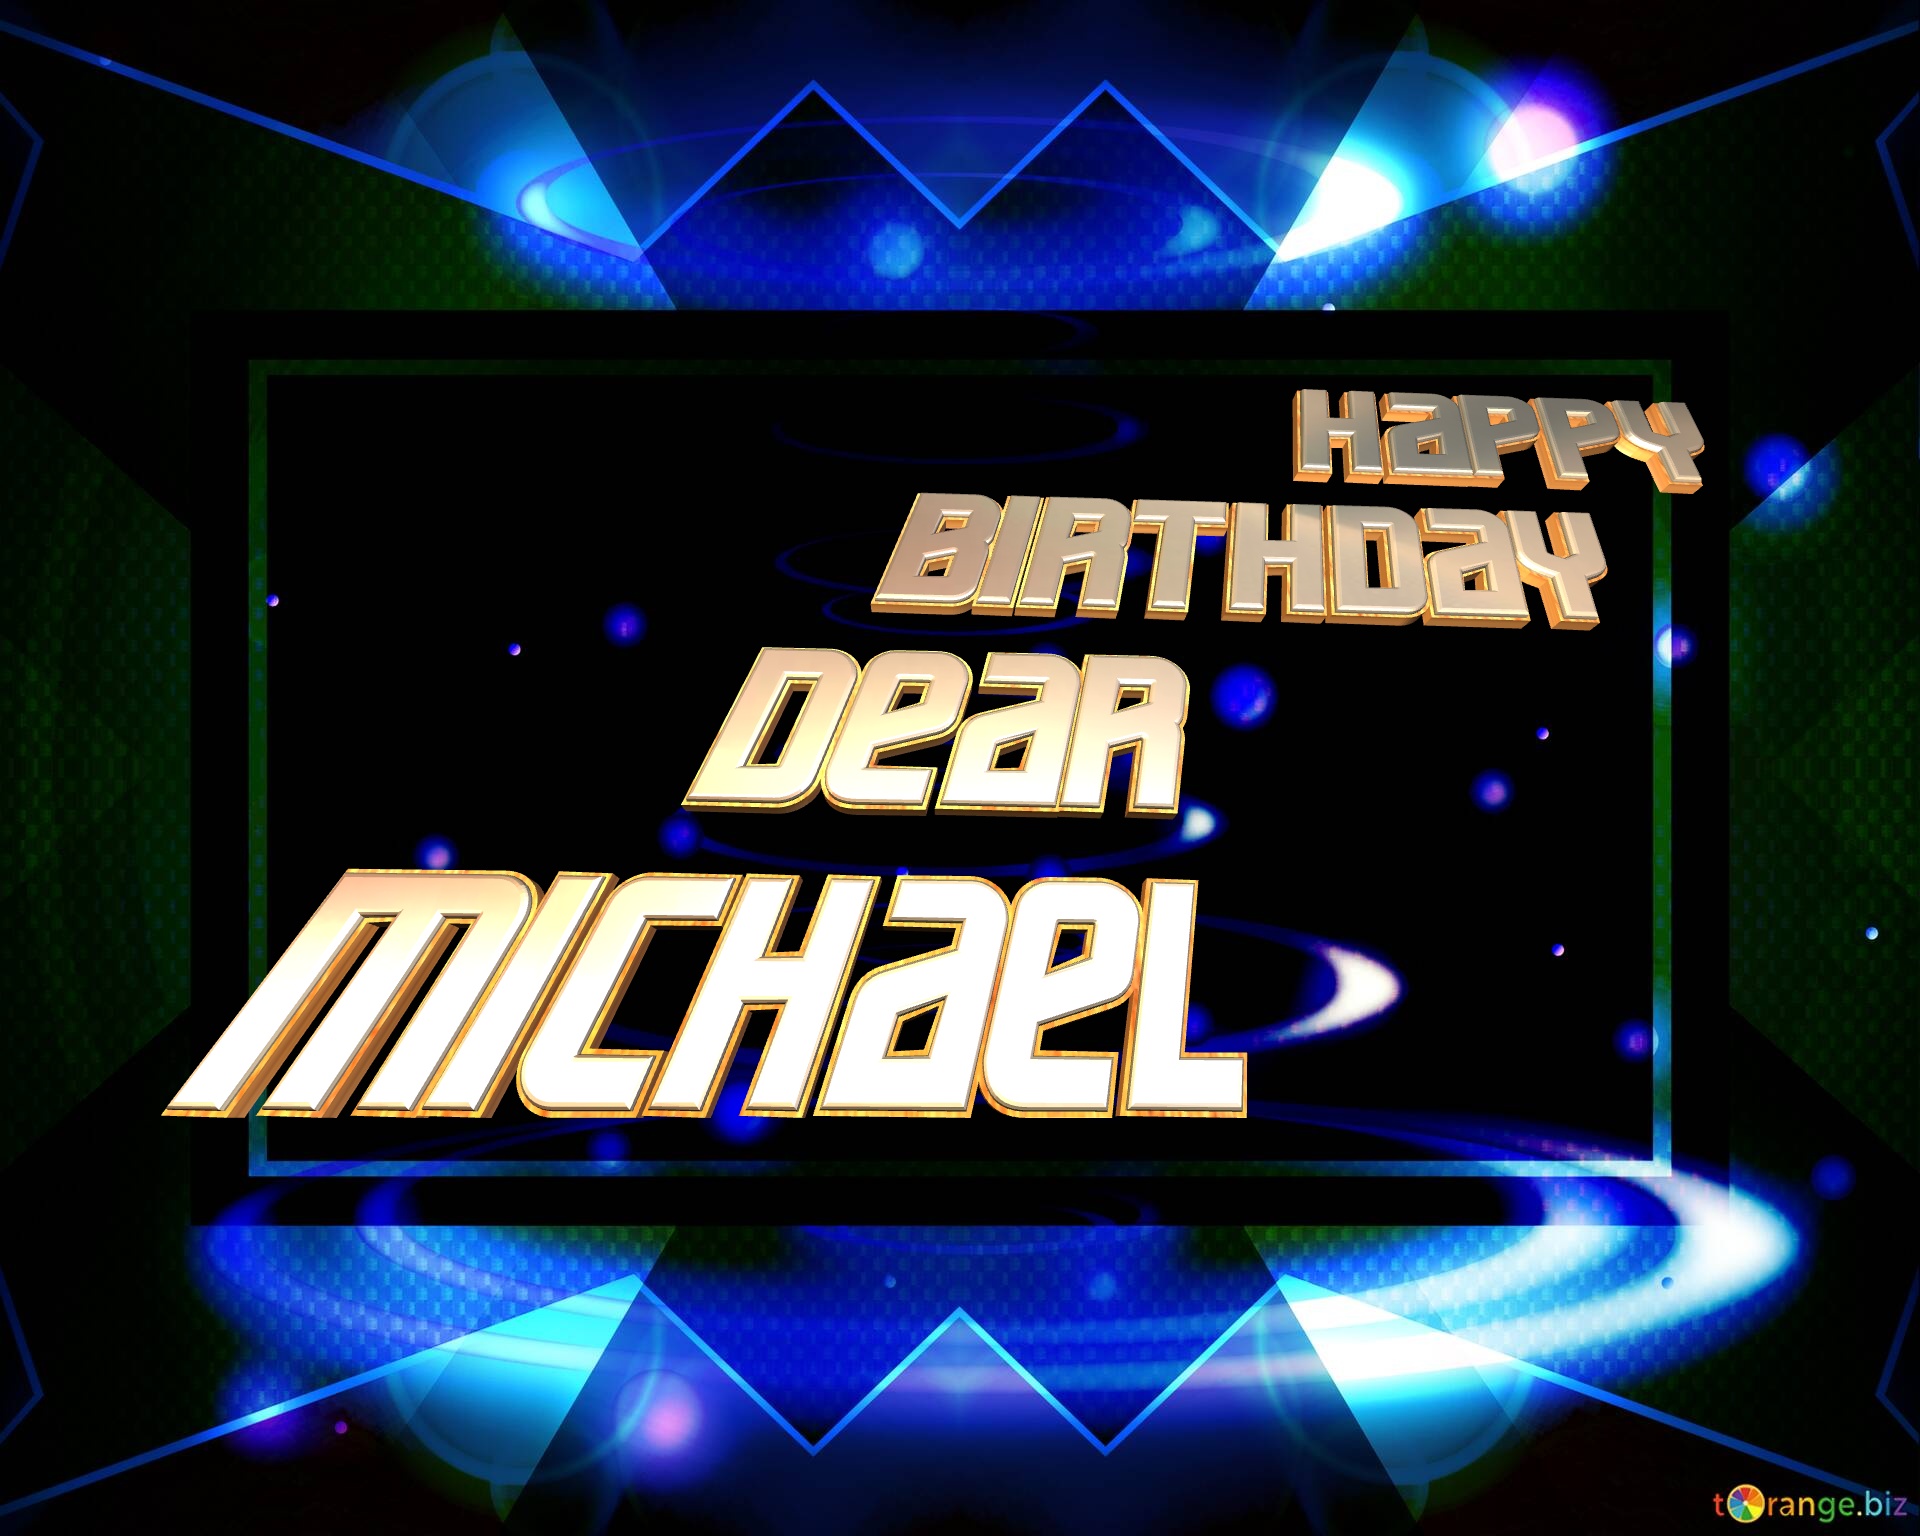              HAPPY       BIRTHDAY     DEAR  MICHAEL  Technology Background responsive №0